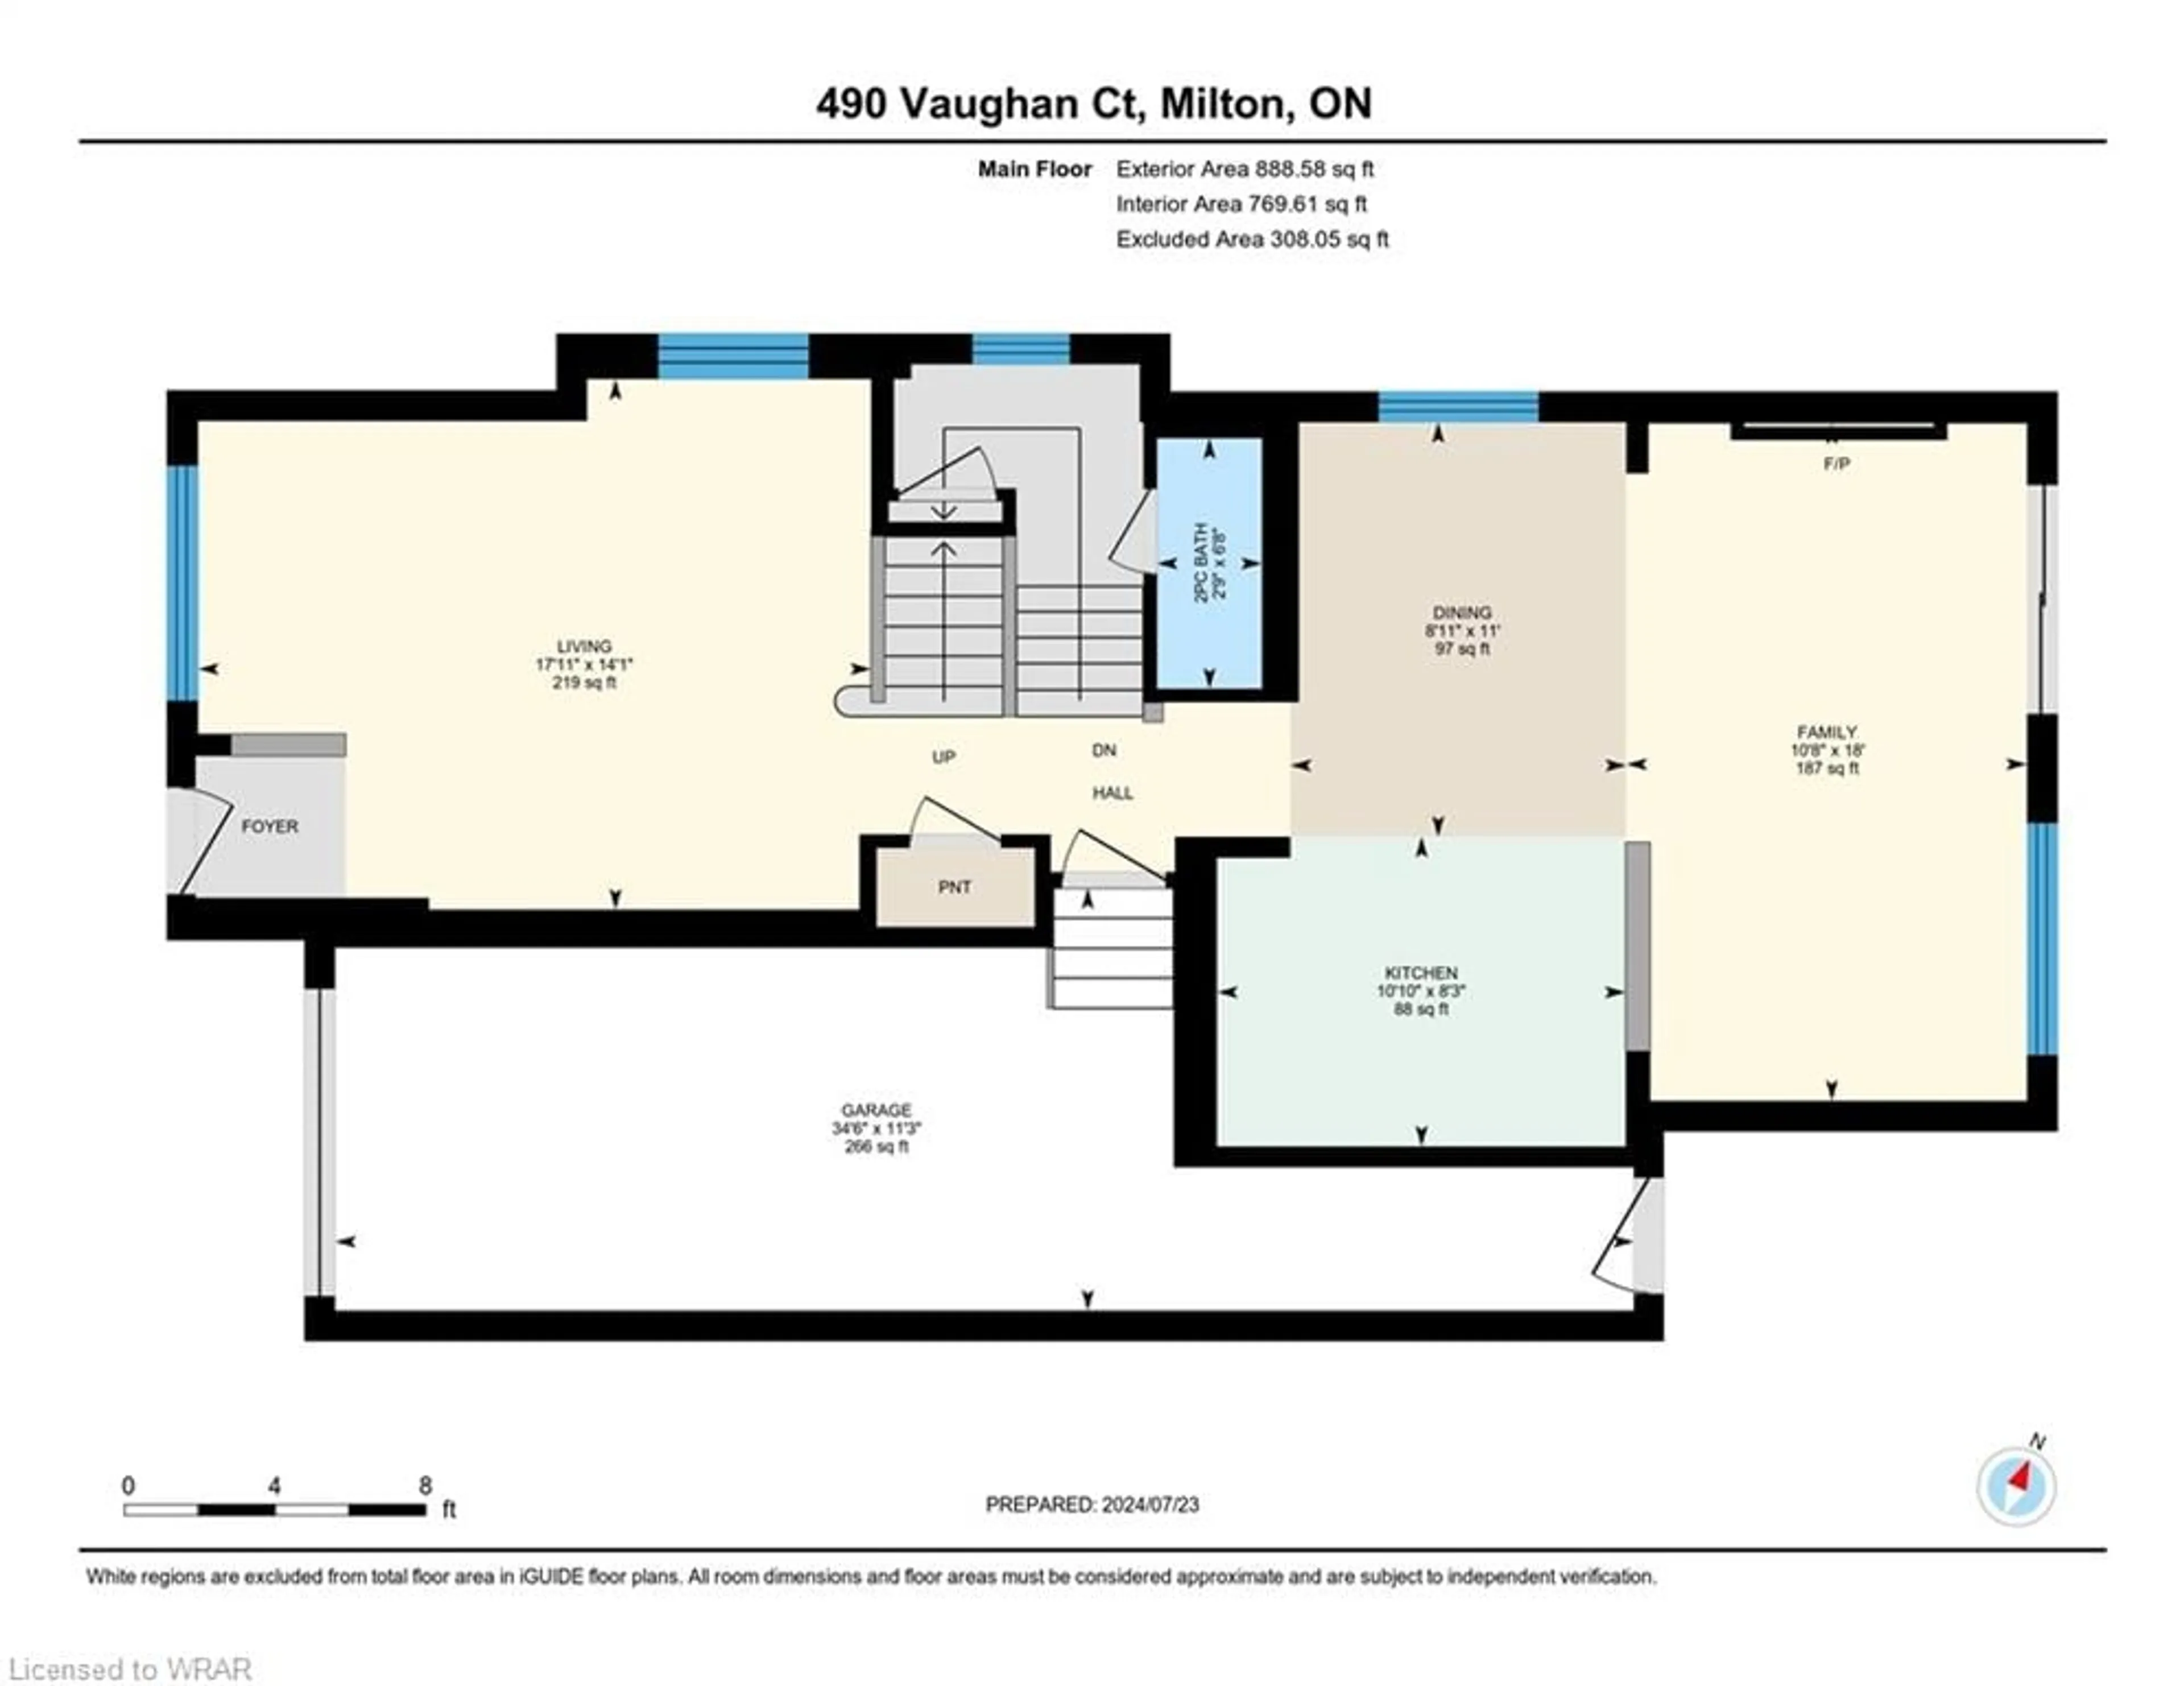 Floor plan for 490 Vaughan Crt, Milton Ontario L9T 8A6